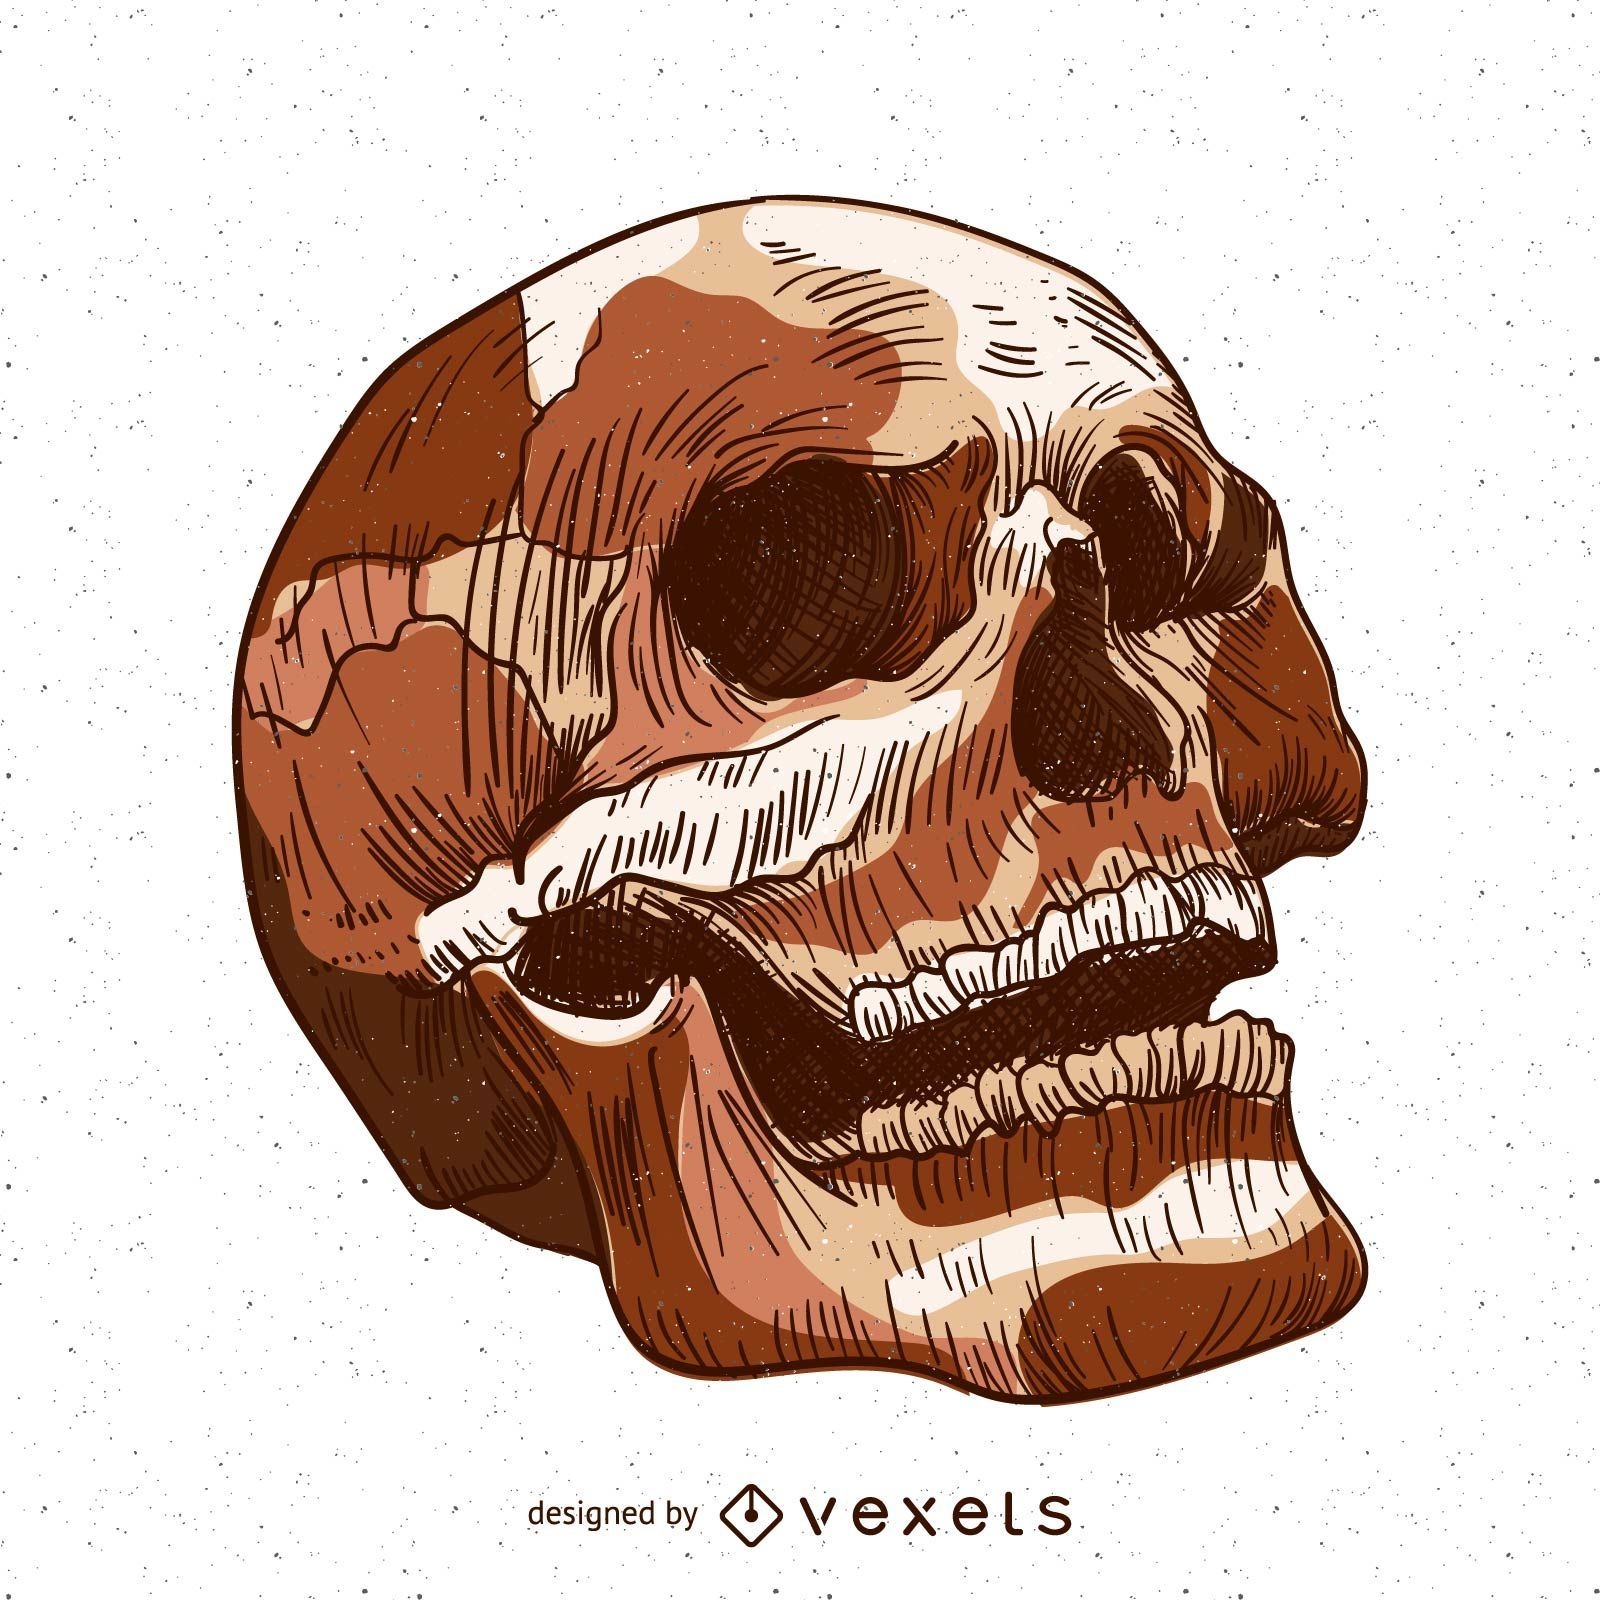 Isolated skull illustration